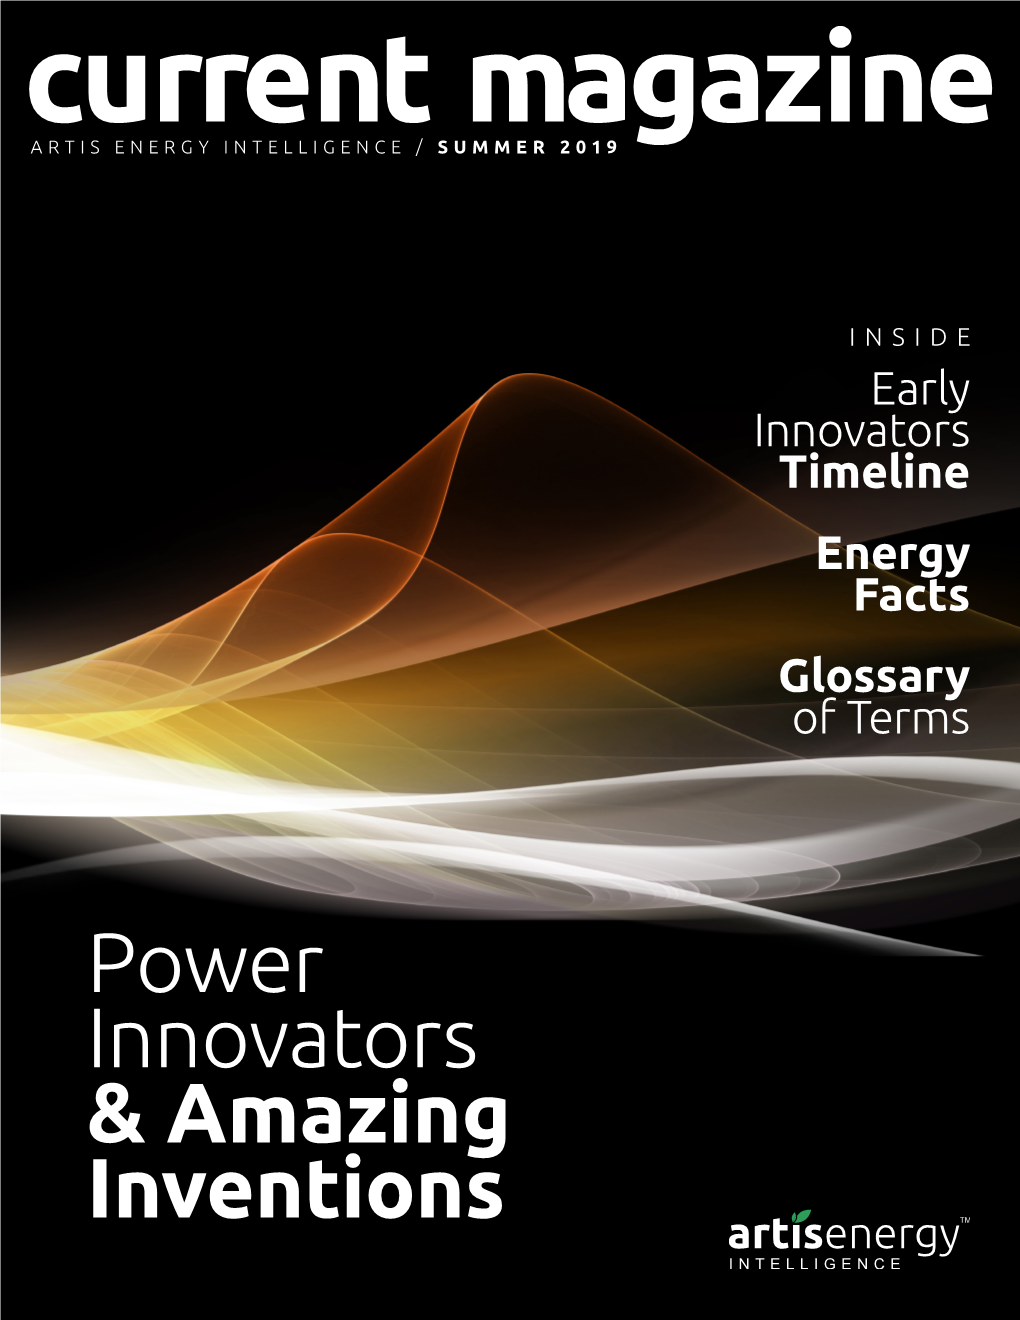 Power Innovators & Amazing Inventions